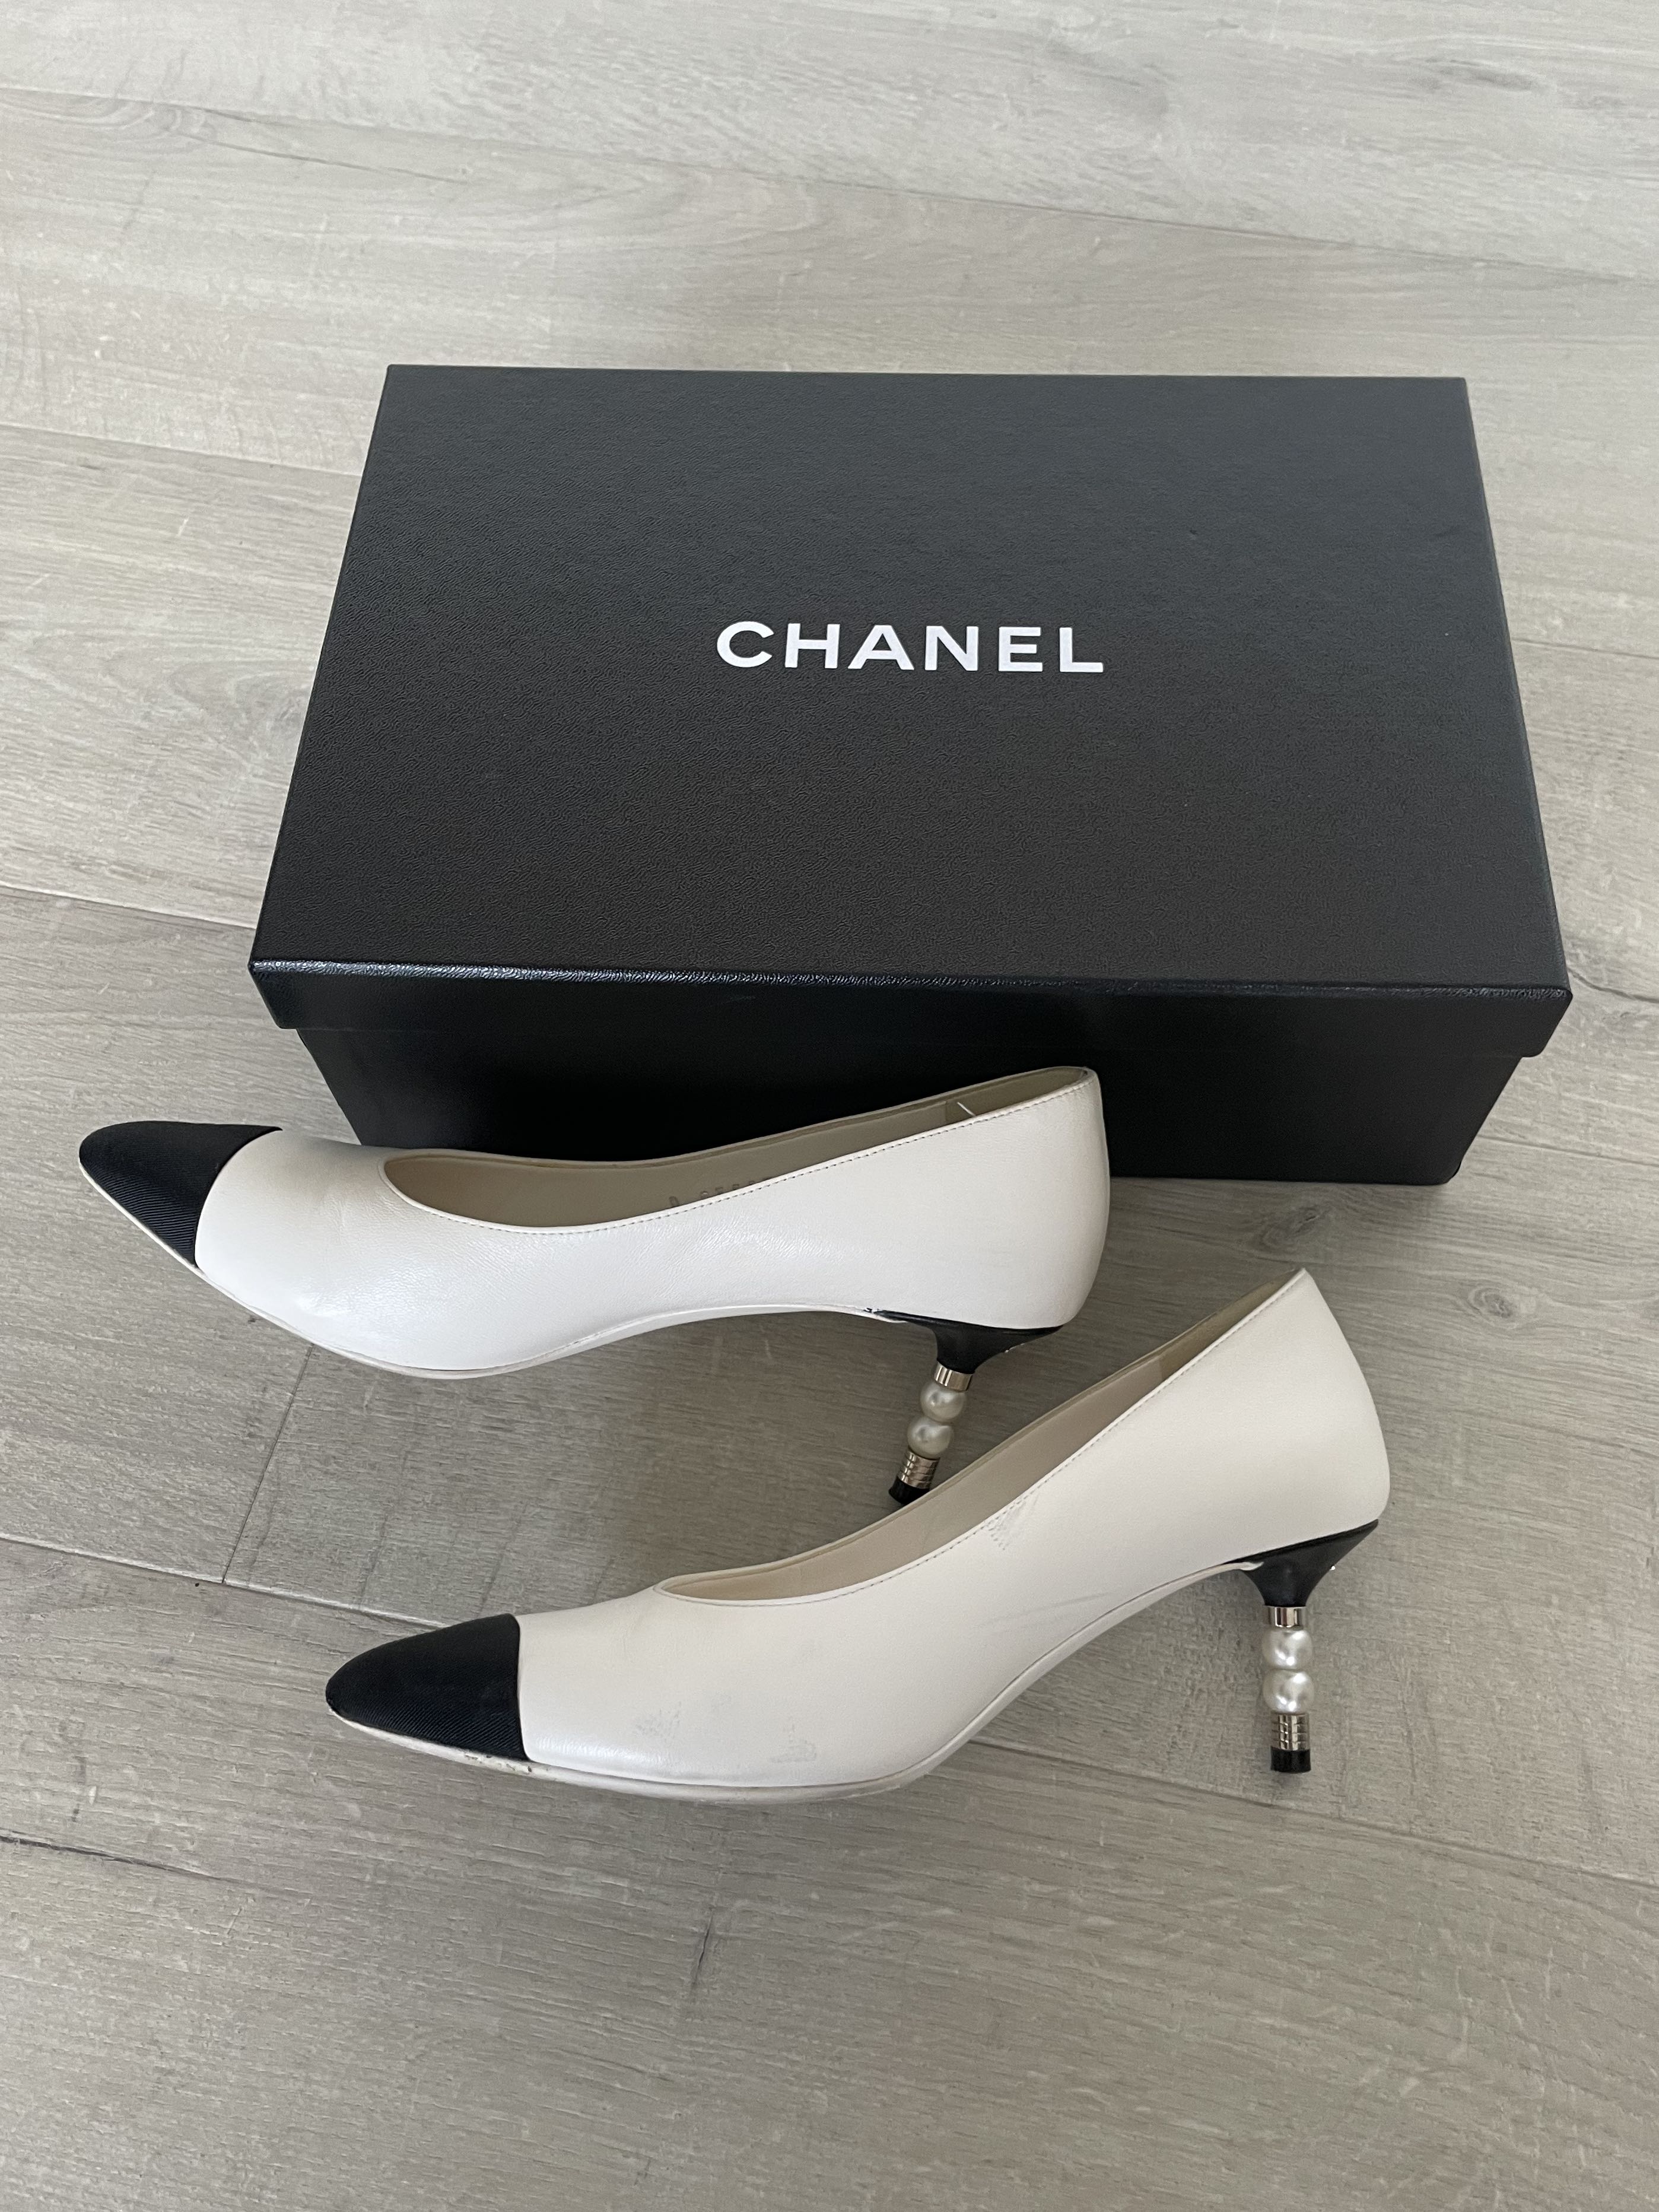 Chanel Heels 37 - White Pearl Detail Pumps Shoes 限量珍珠鞋踭黑白 ...